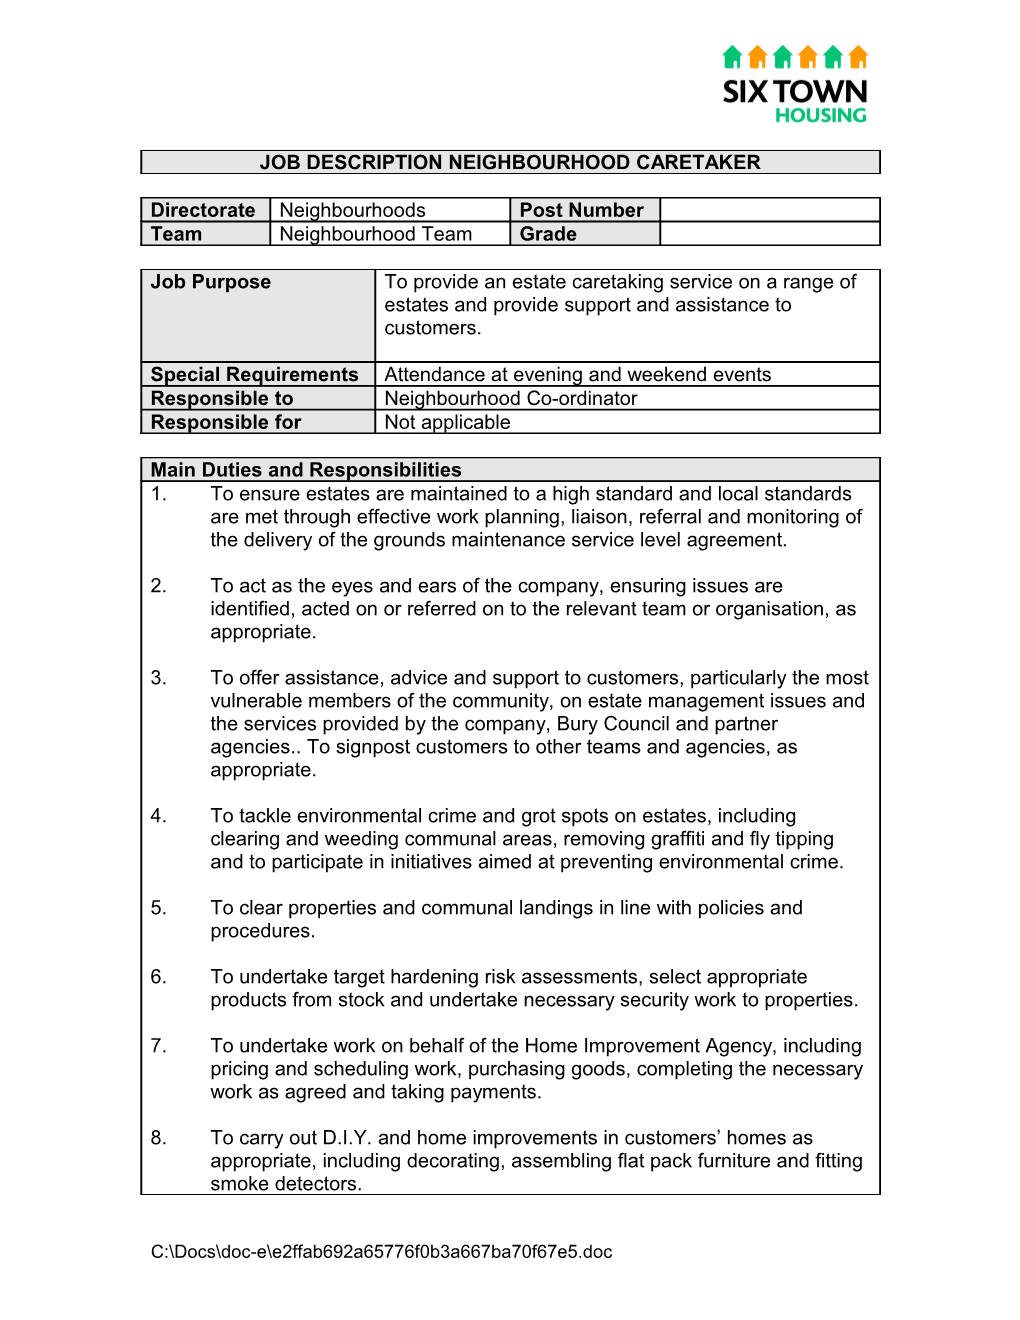 Q: HR Job Evaluation JE 2013 Job Descriptions Neighbourhoods Neighbourhood Caretaker 010513